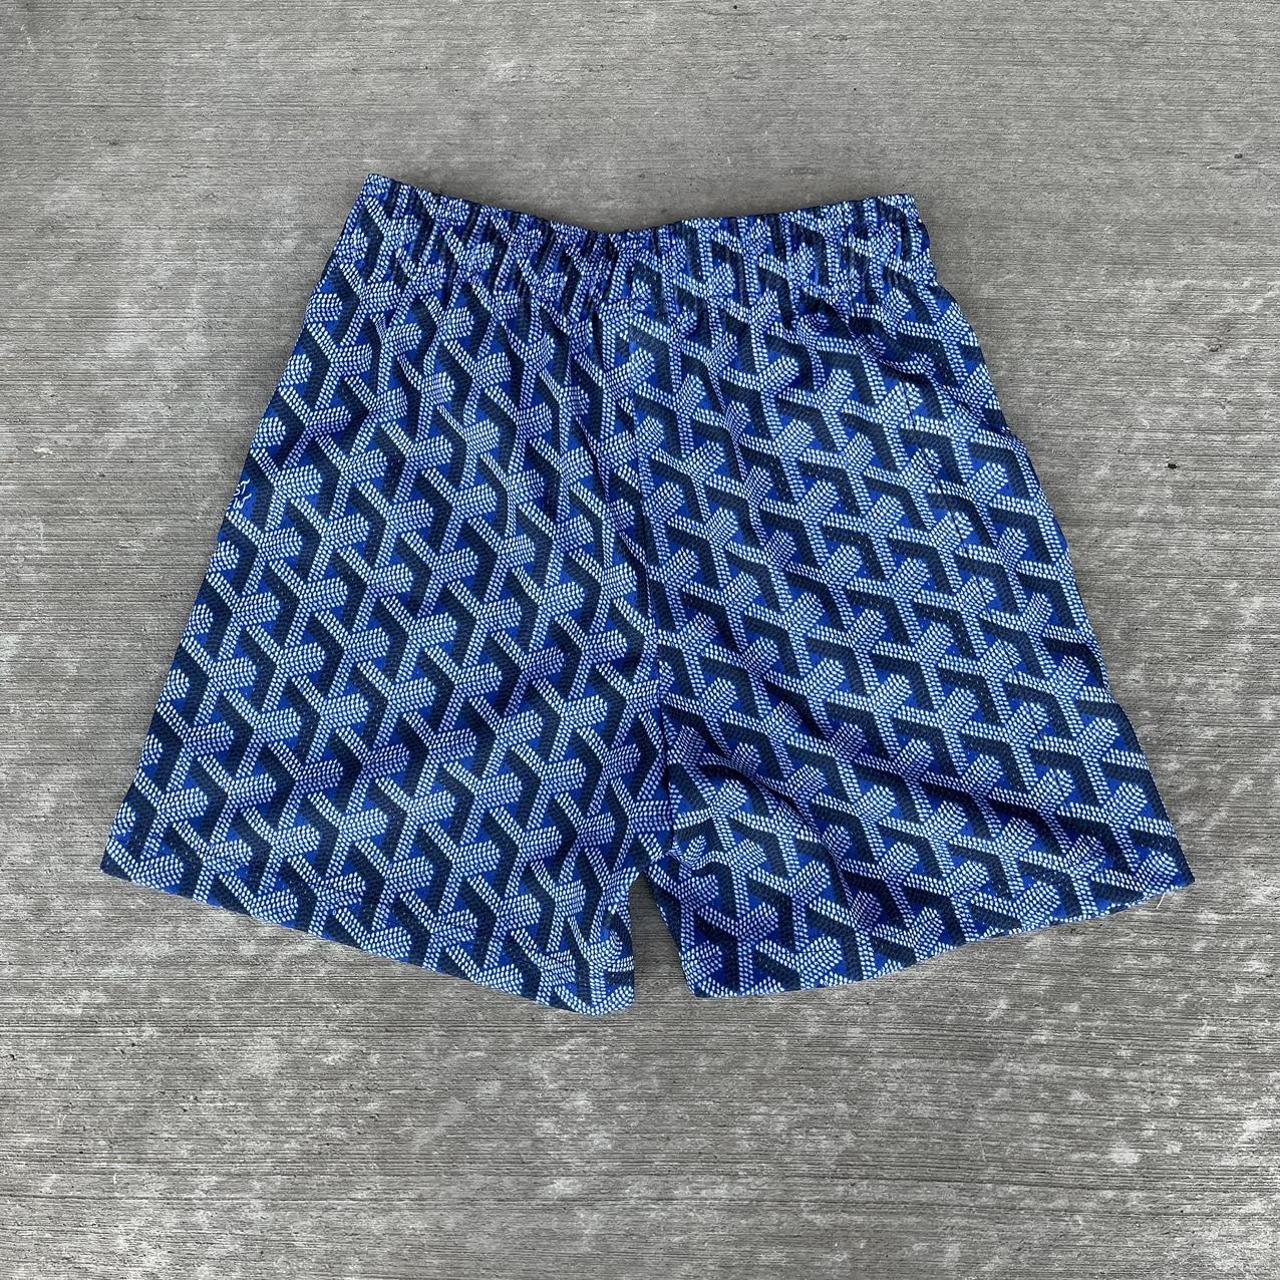 Bravest Studios LV camo shorts, men's - Depop